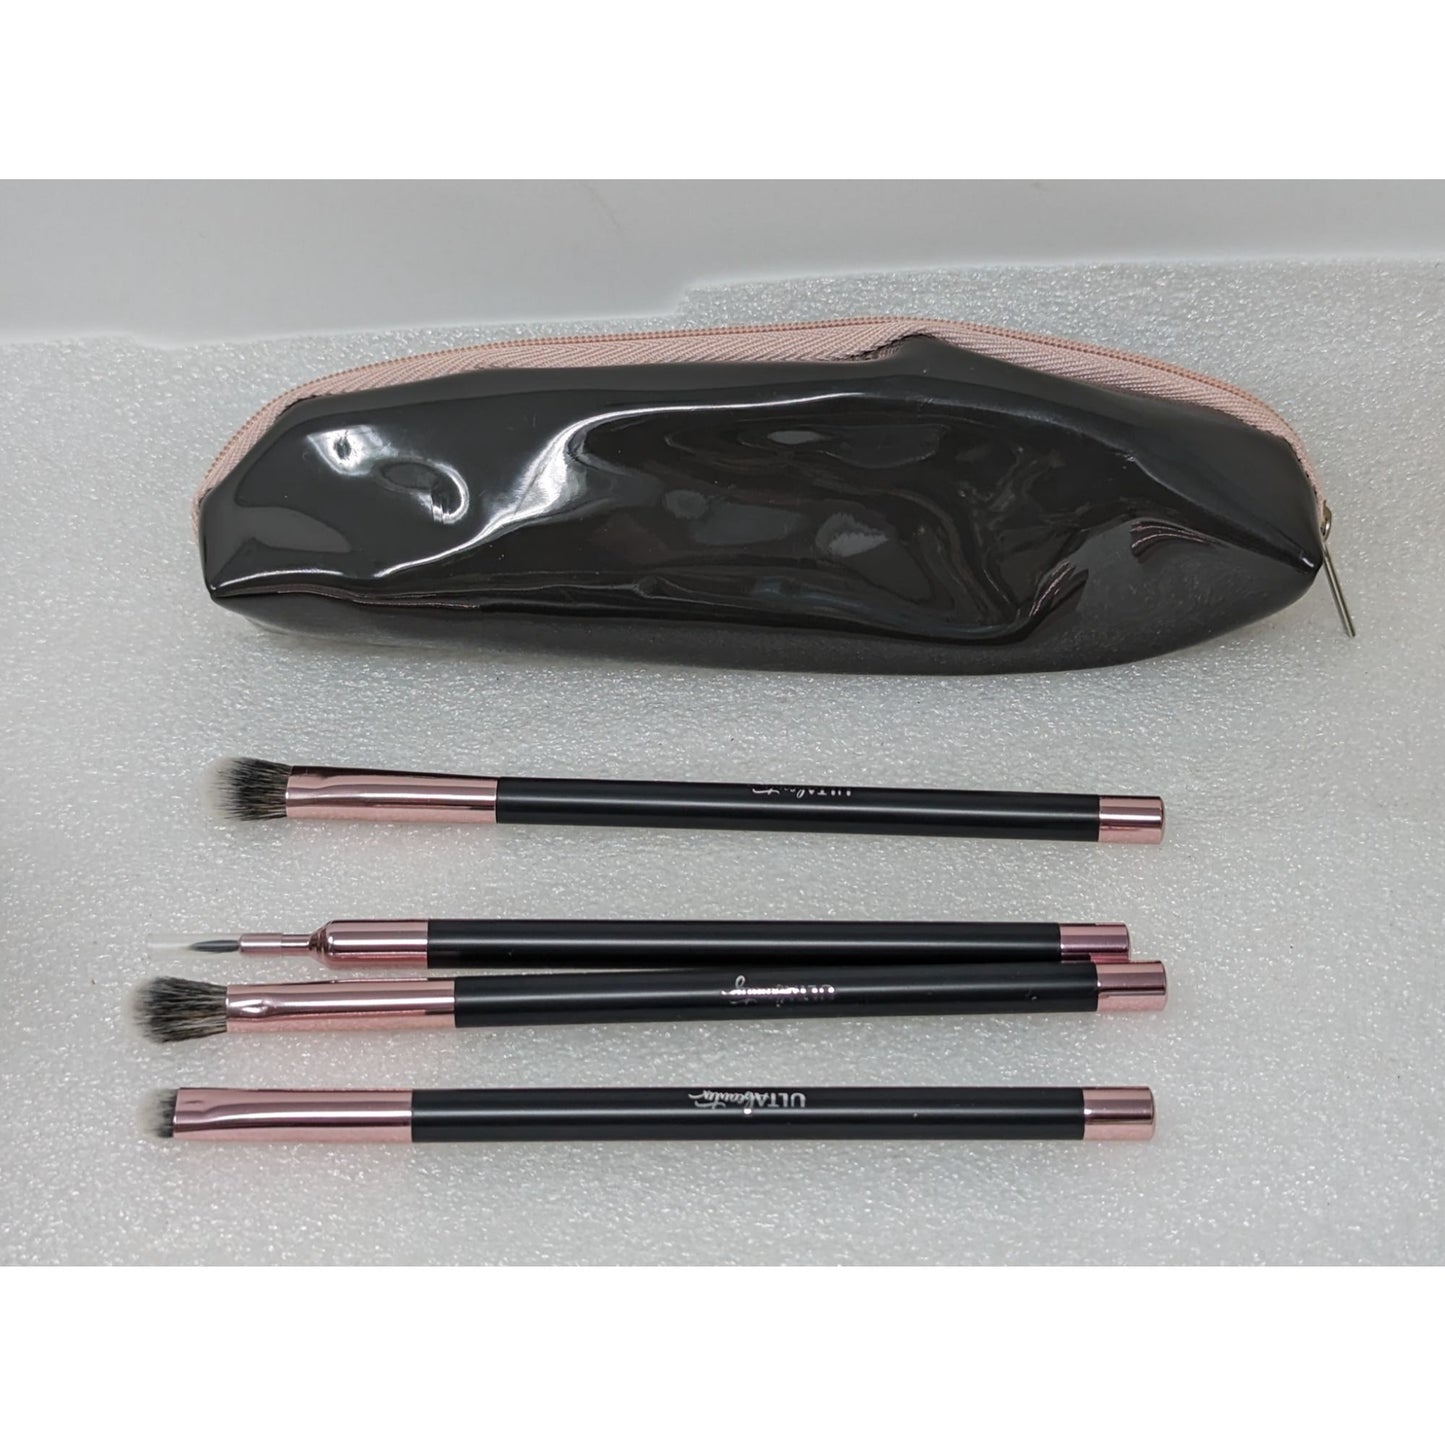 Ulta Beauty 4 Piece Makeup Cosmetics Brush Set with Case